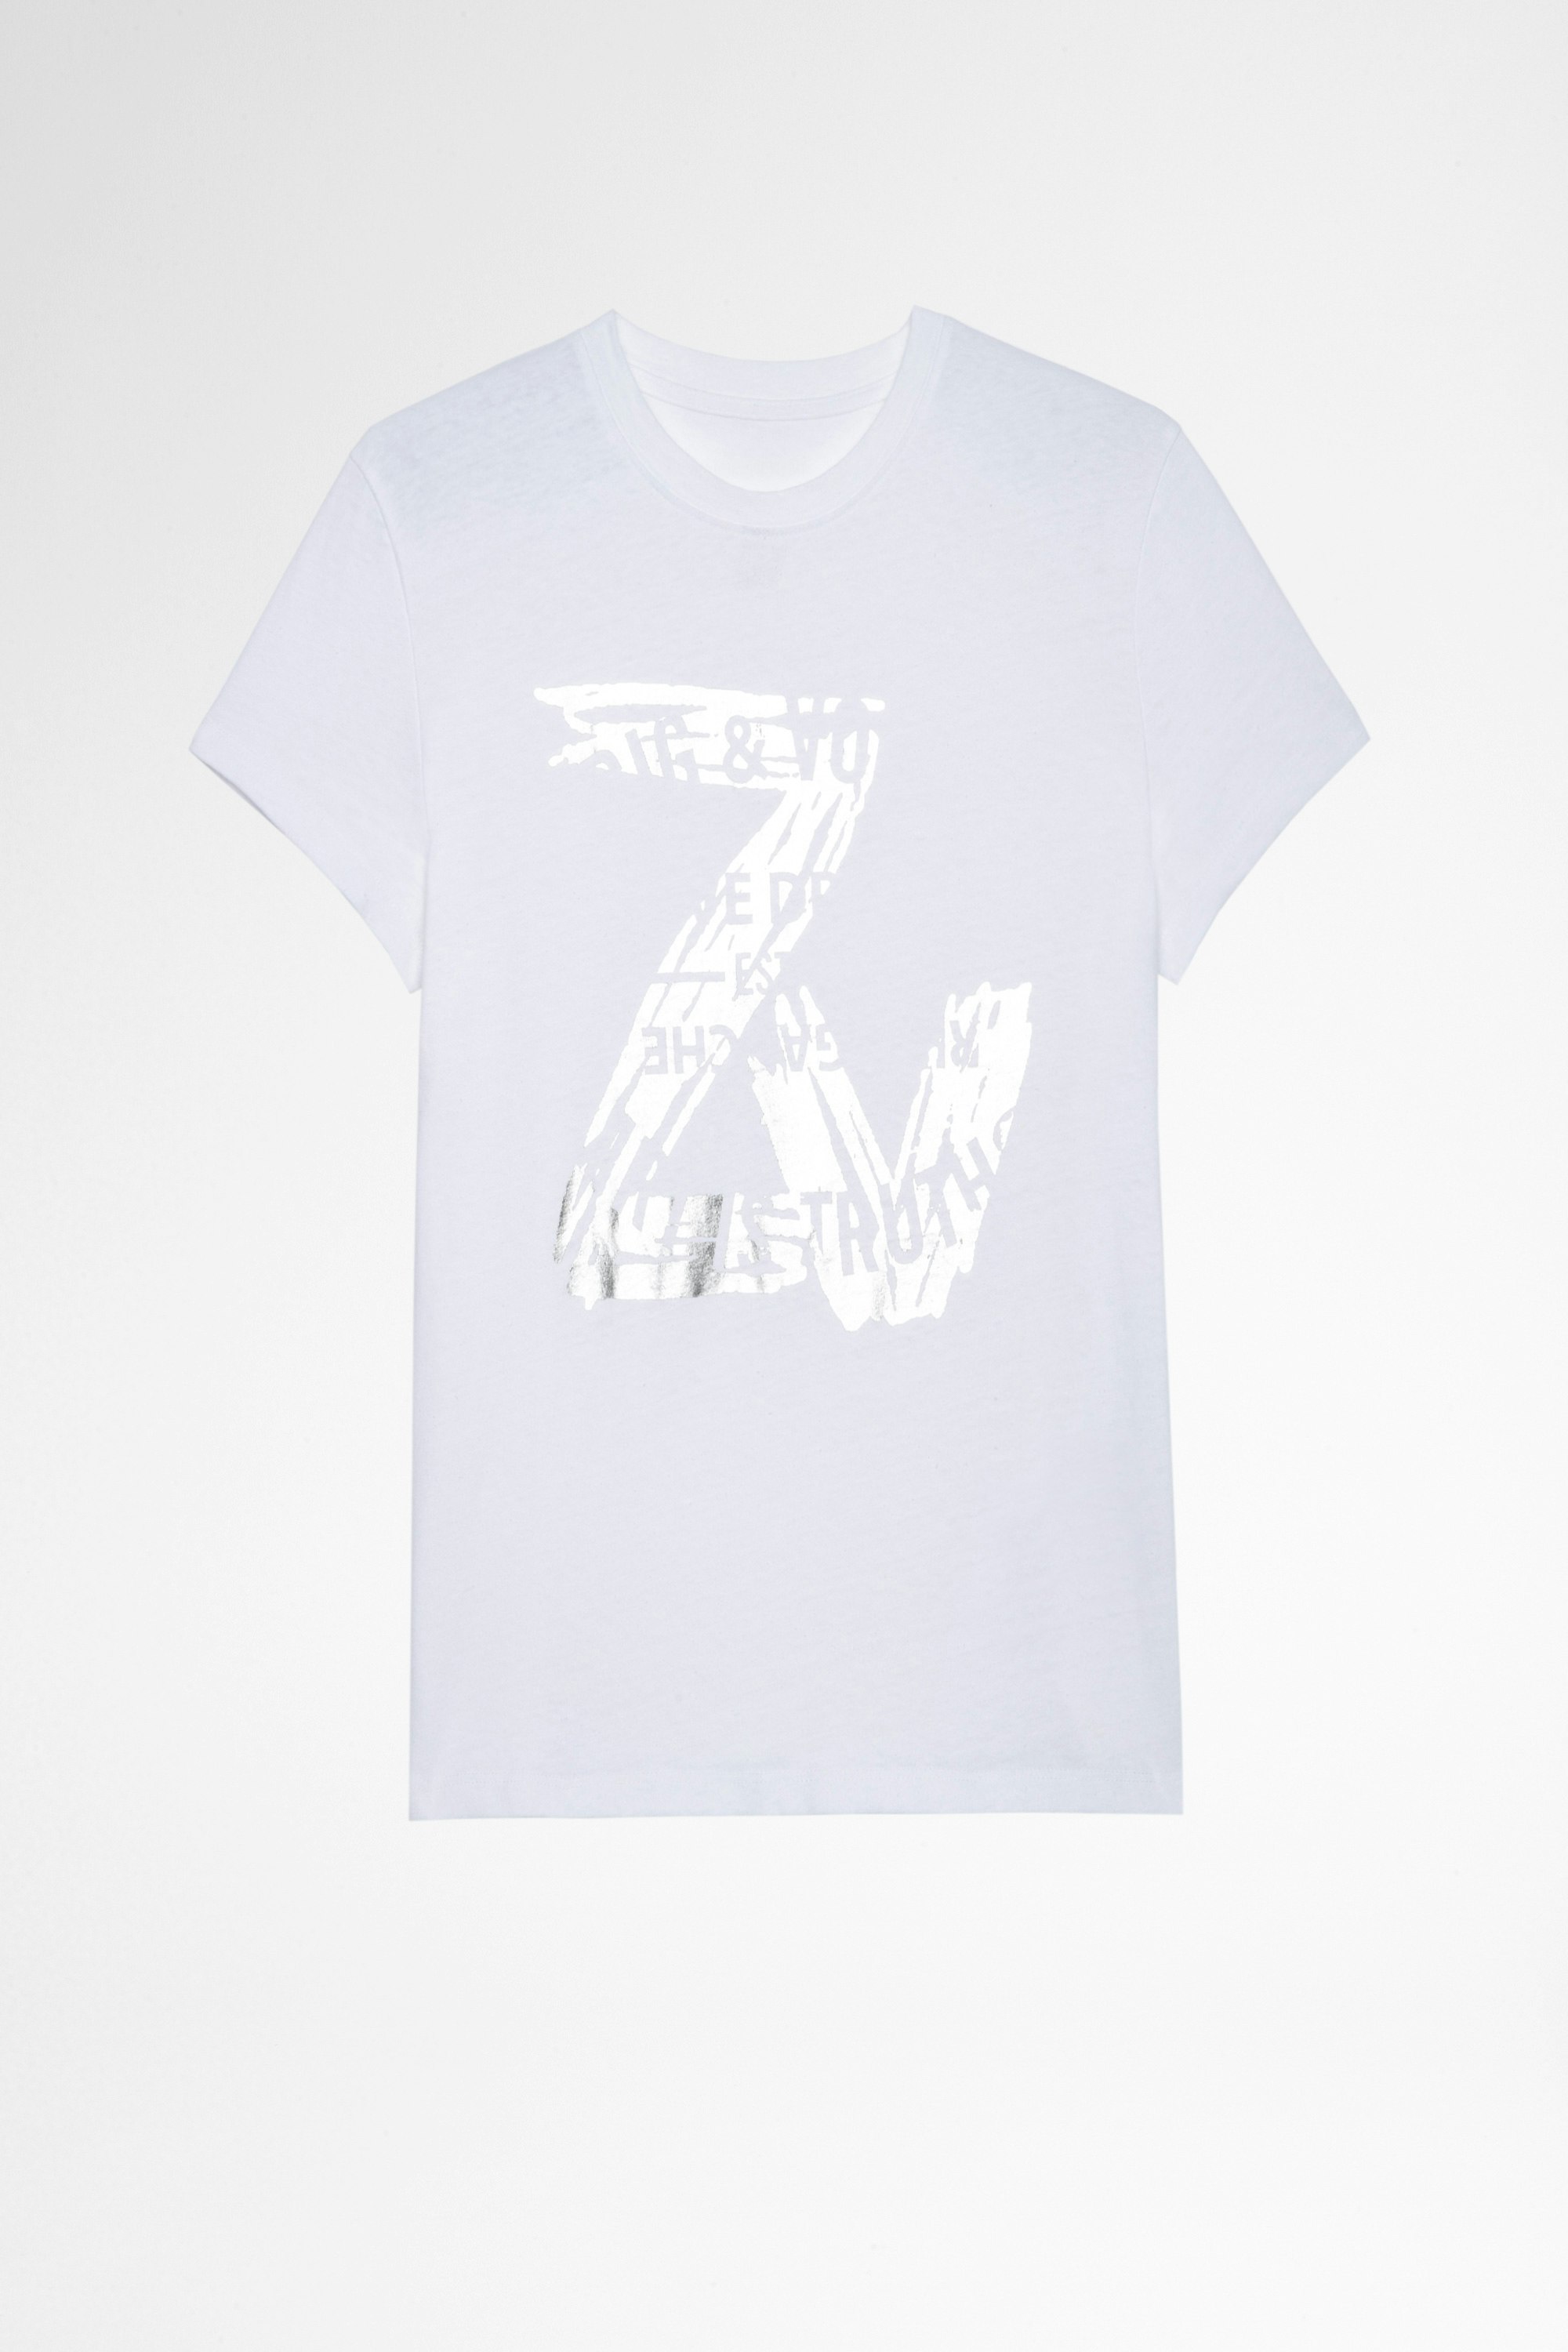 Camiseta Zoe ZV New Blason Camiseta blanca de algodón con aplicación plateada ZV para mujer